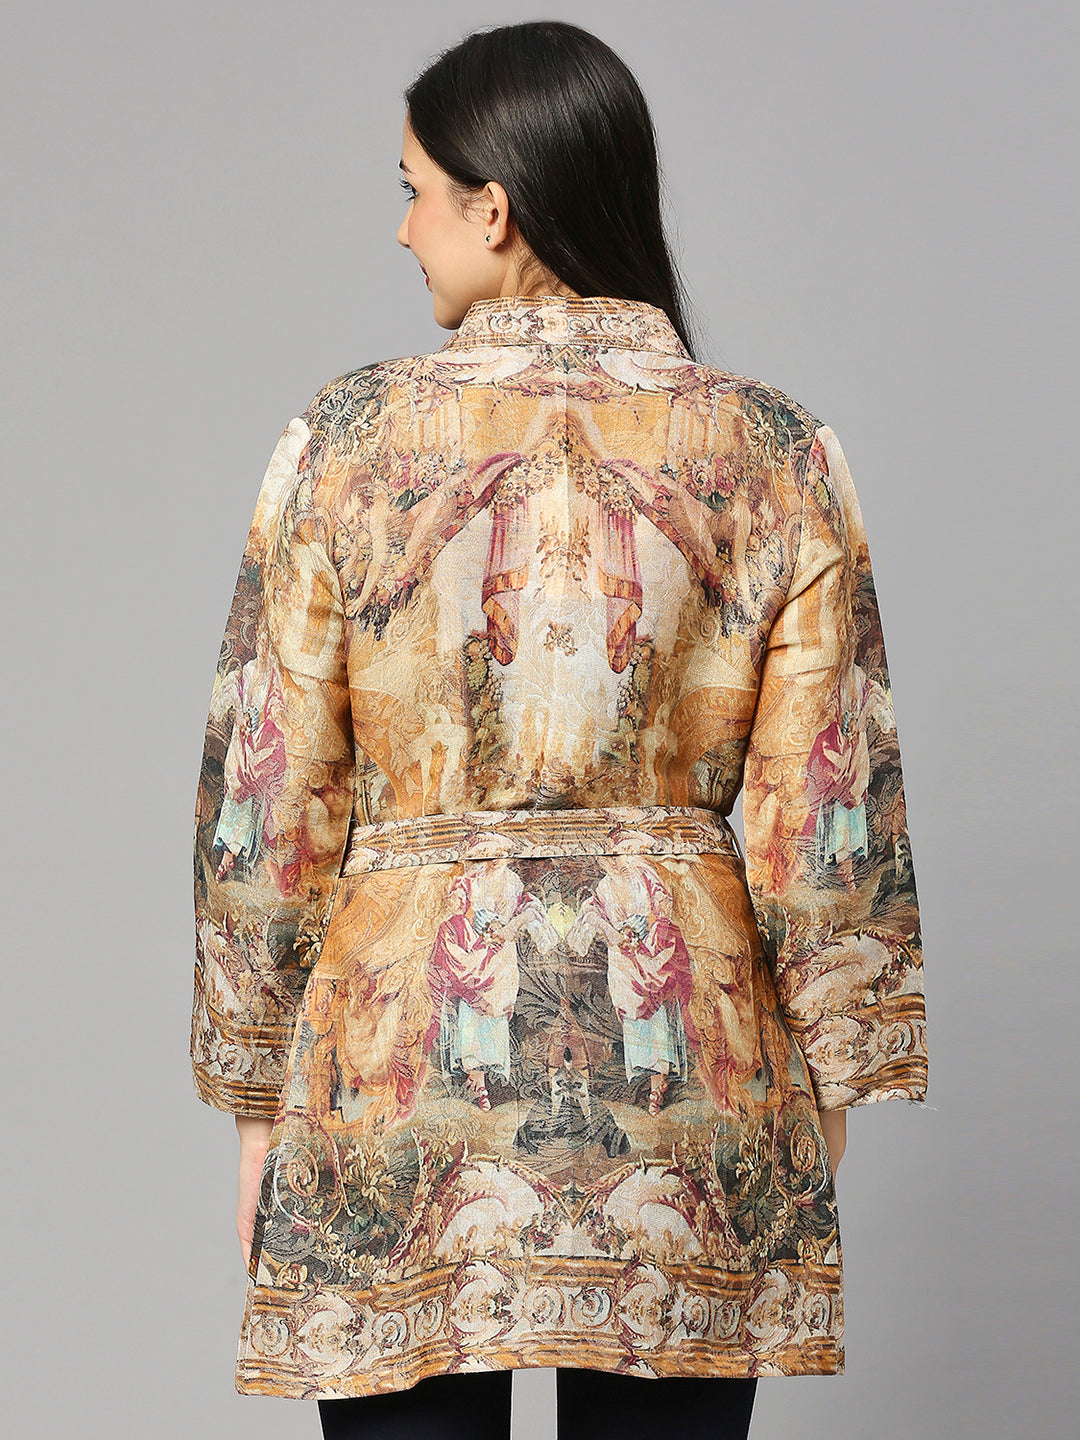 Roman Printed Design Kimono on Metallic Fabric